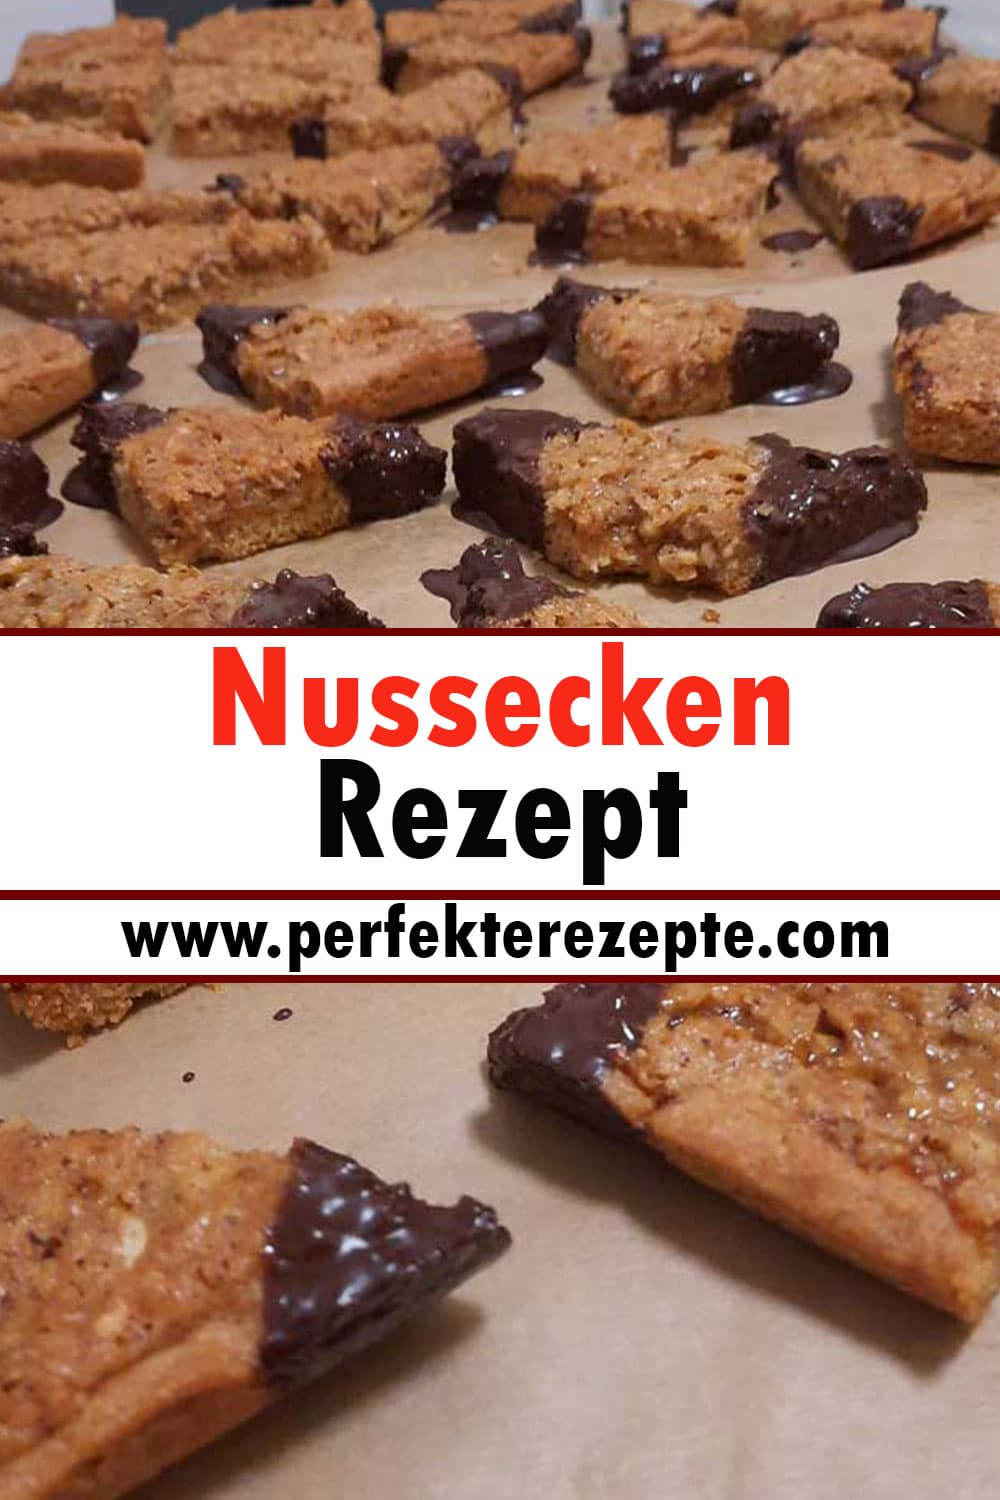 Nussecken Rezept